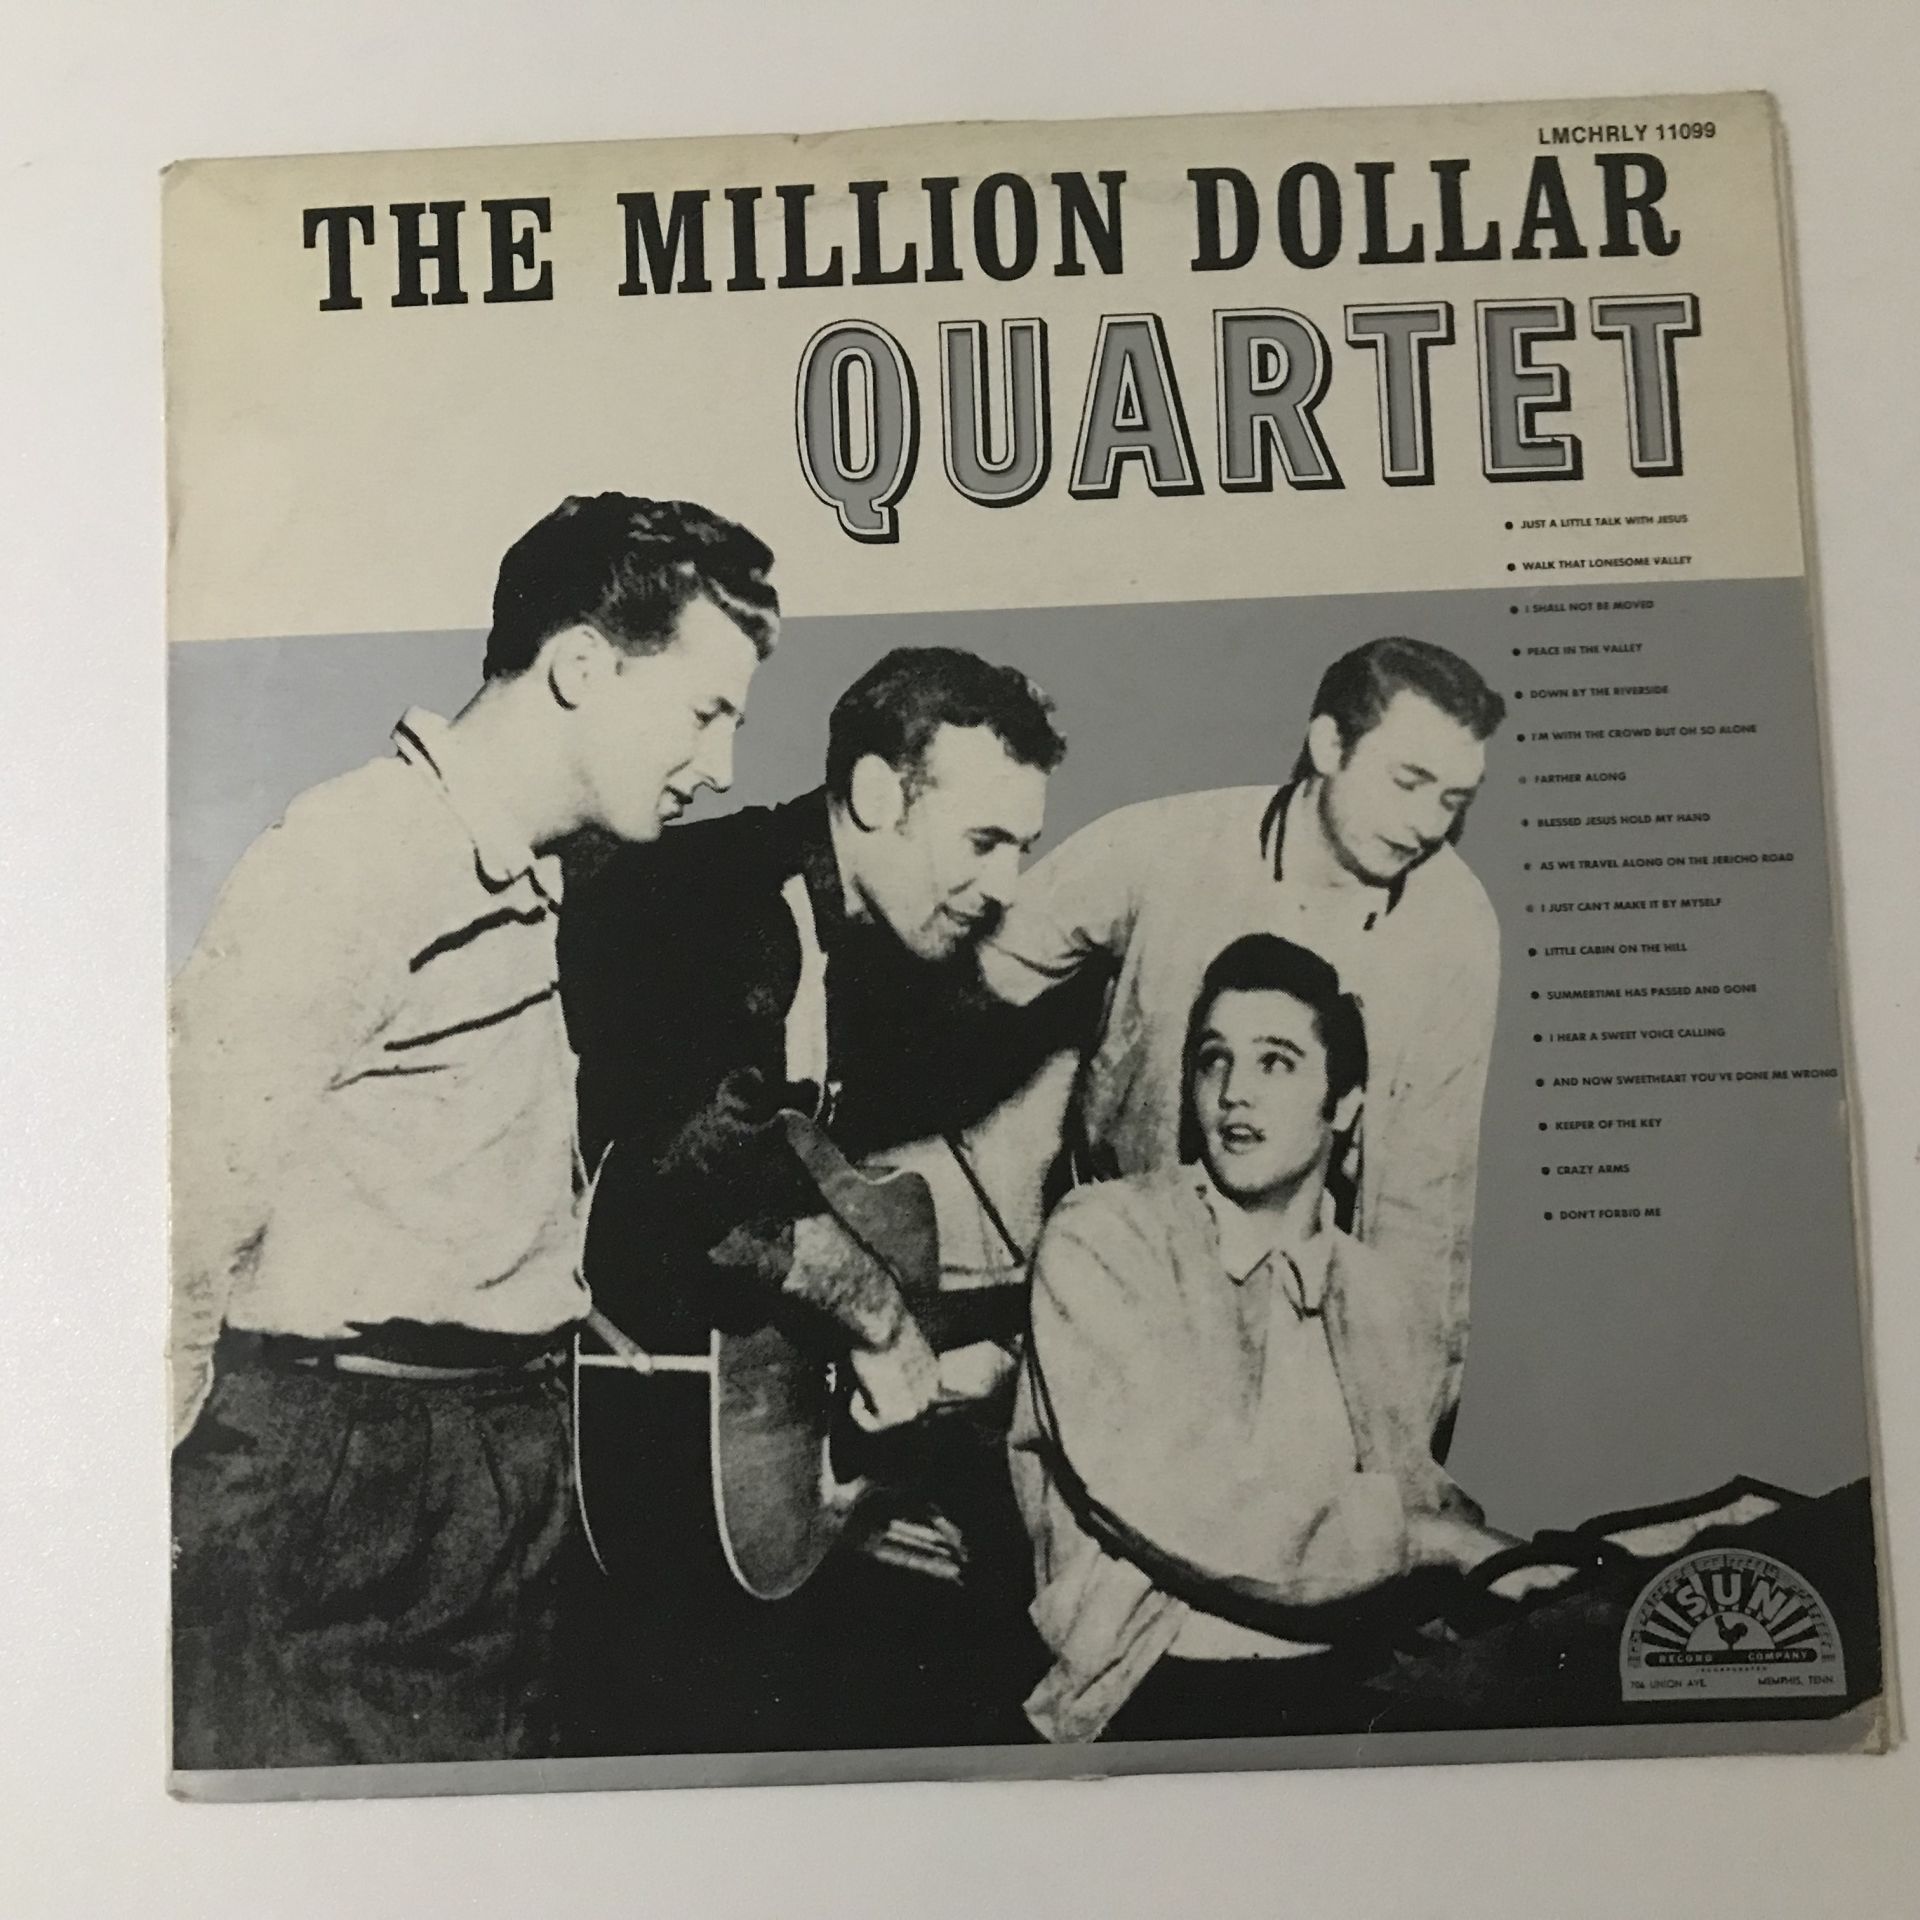 The Million Dollar Quartet – The Million Dollar Quartet